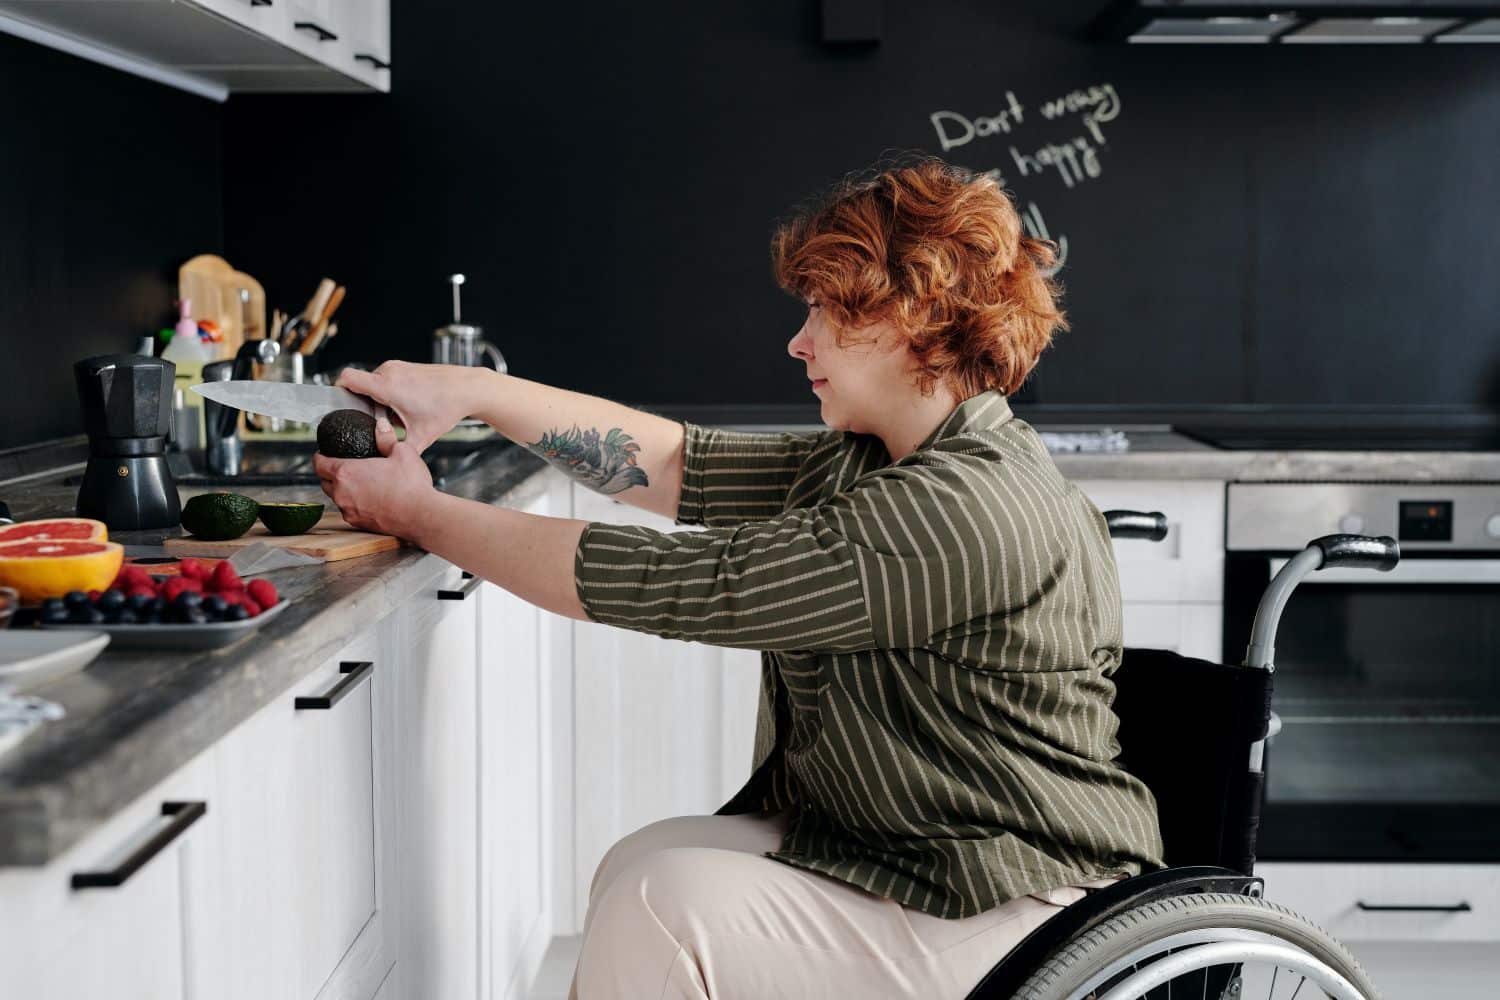 Vse na dosegu z invalidskim vozičkom: kako načrtovati kuhinjo za gibalno ovirane?